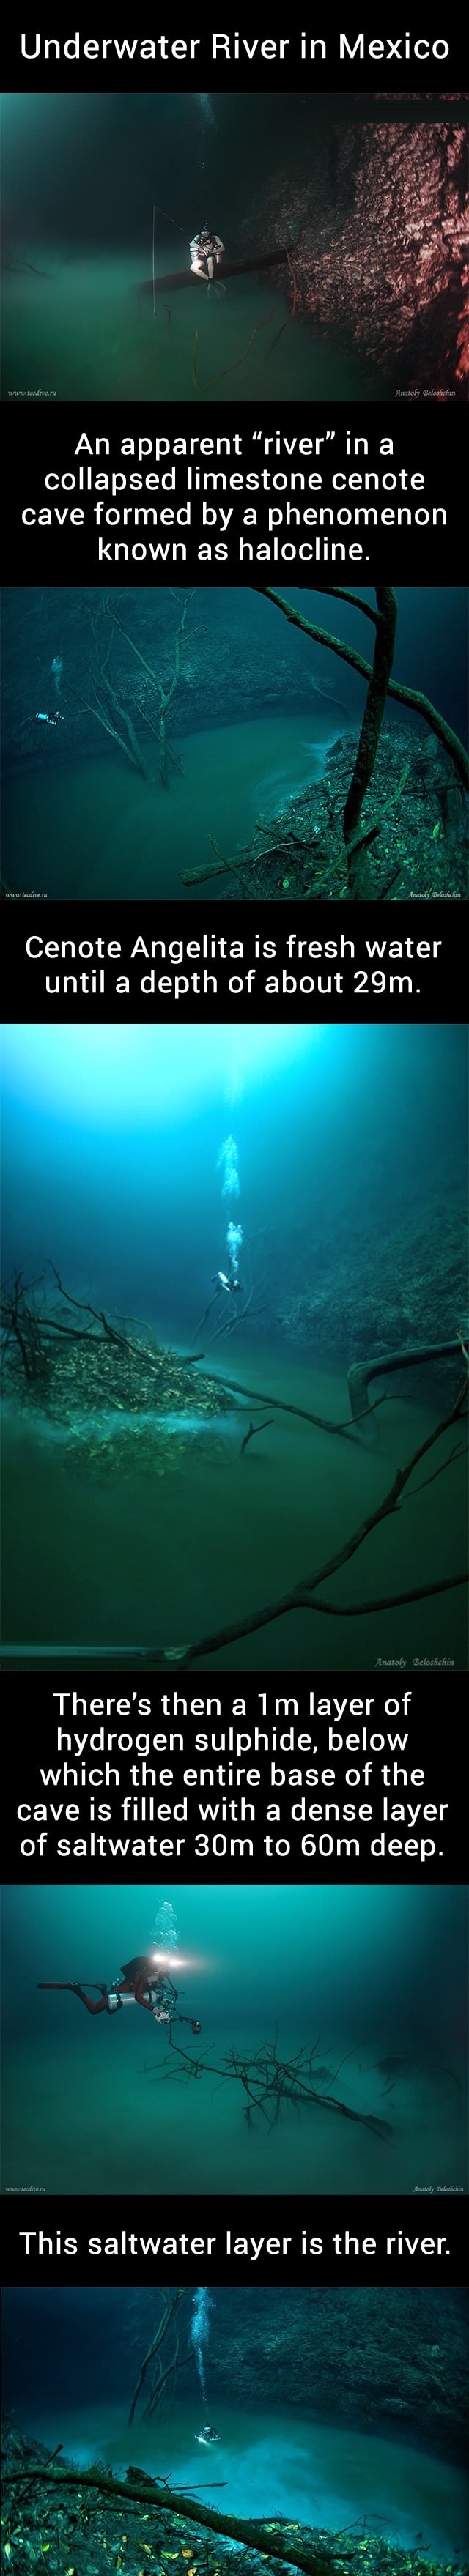 Underwater river, Mexico